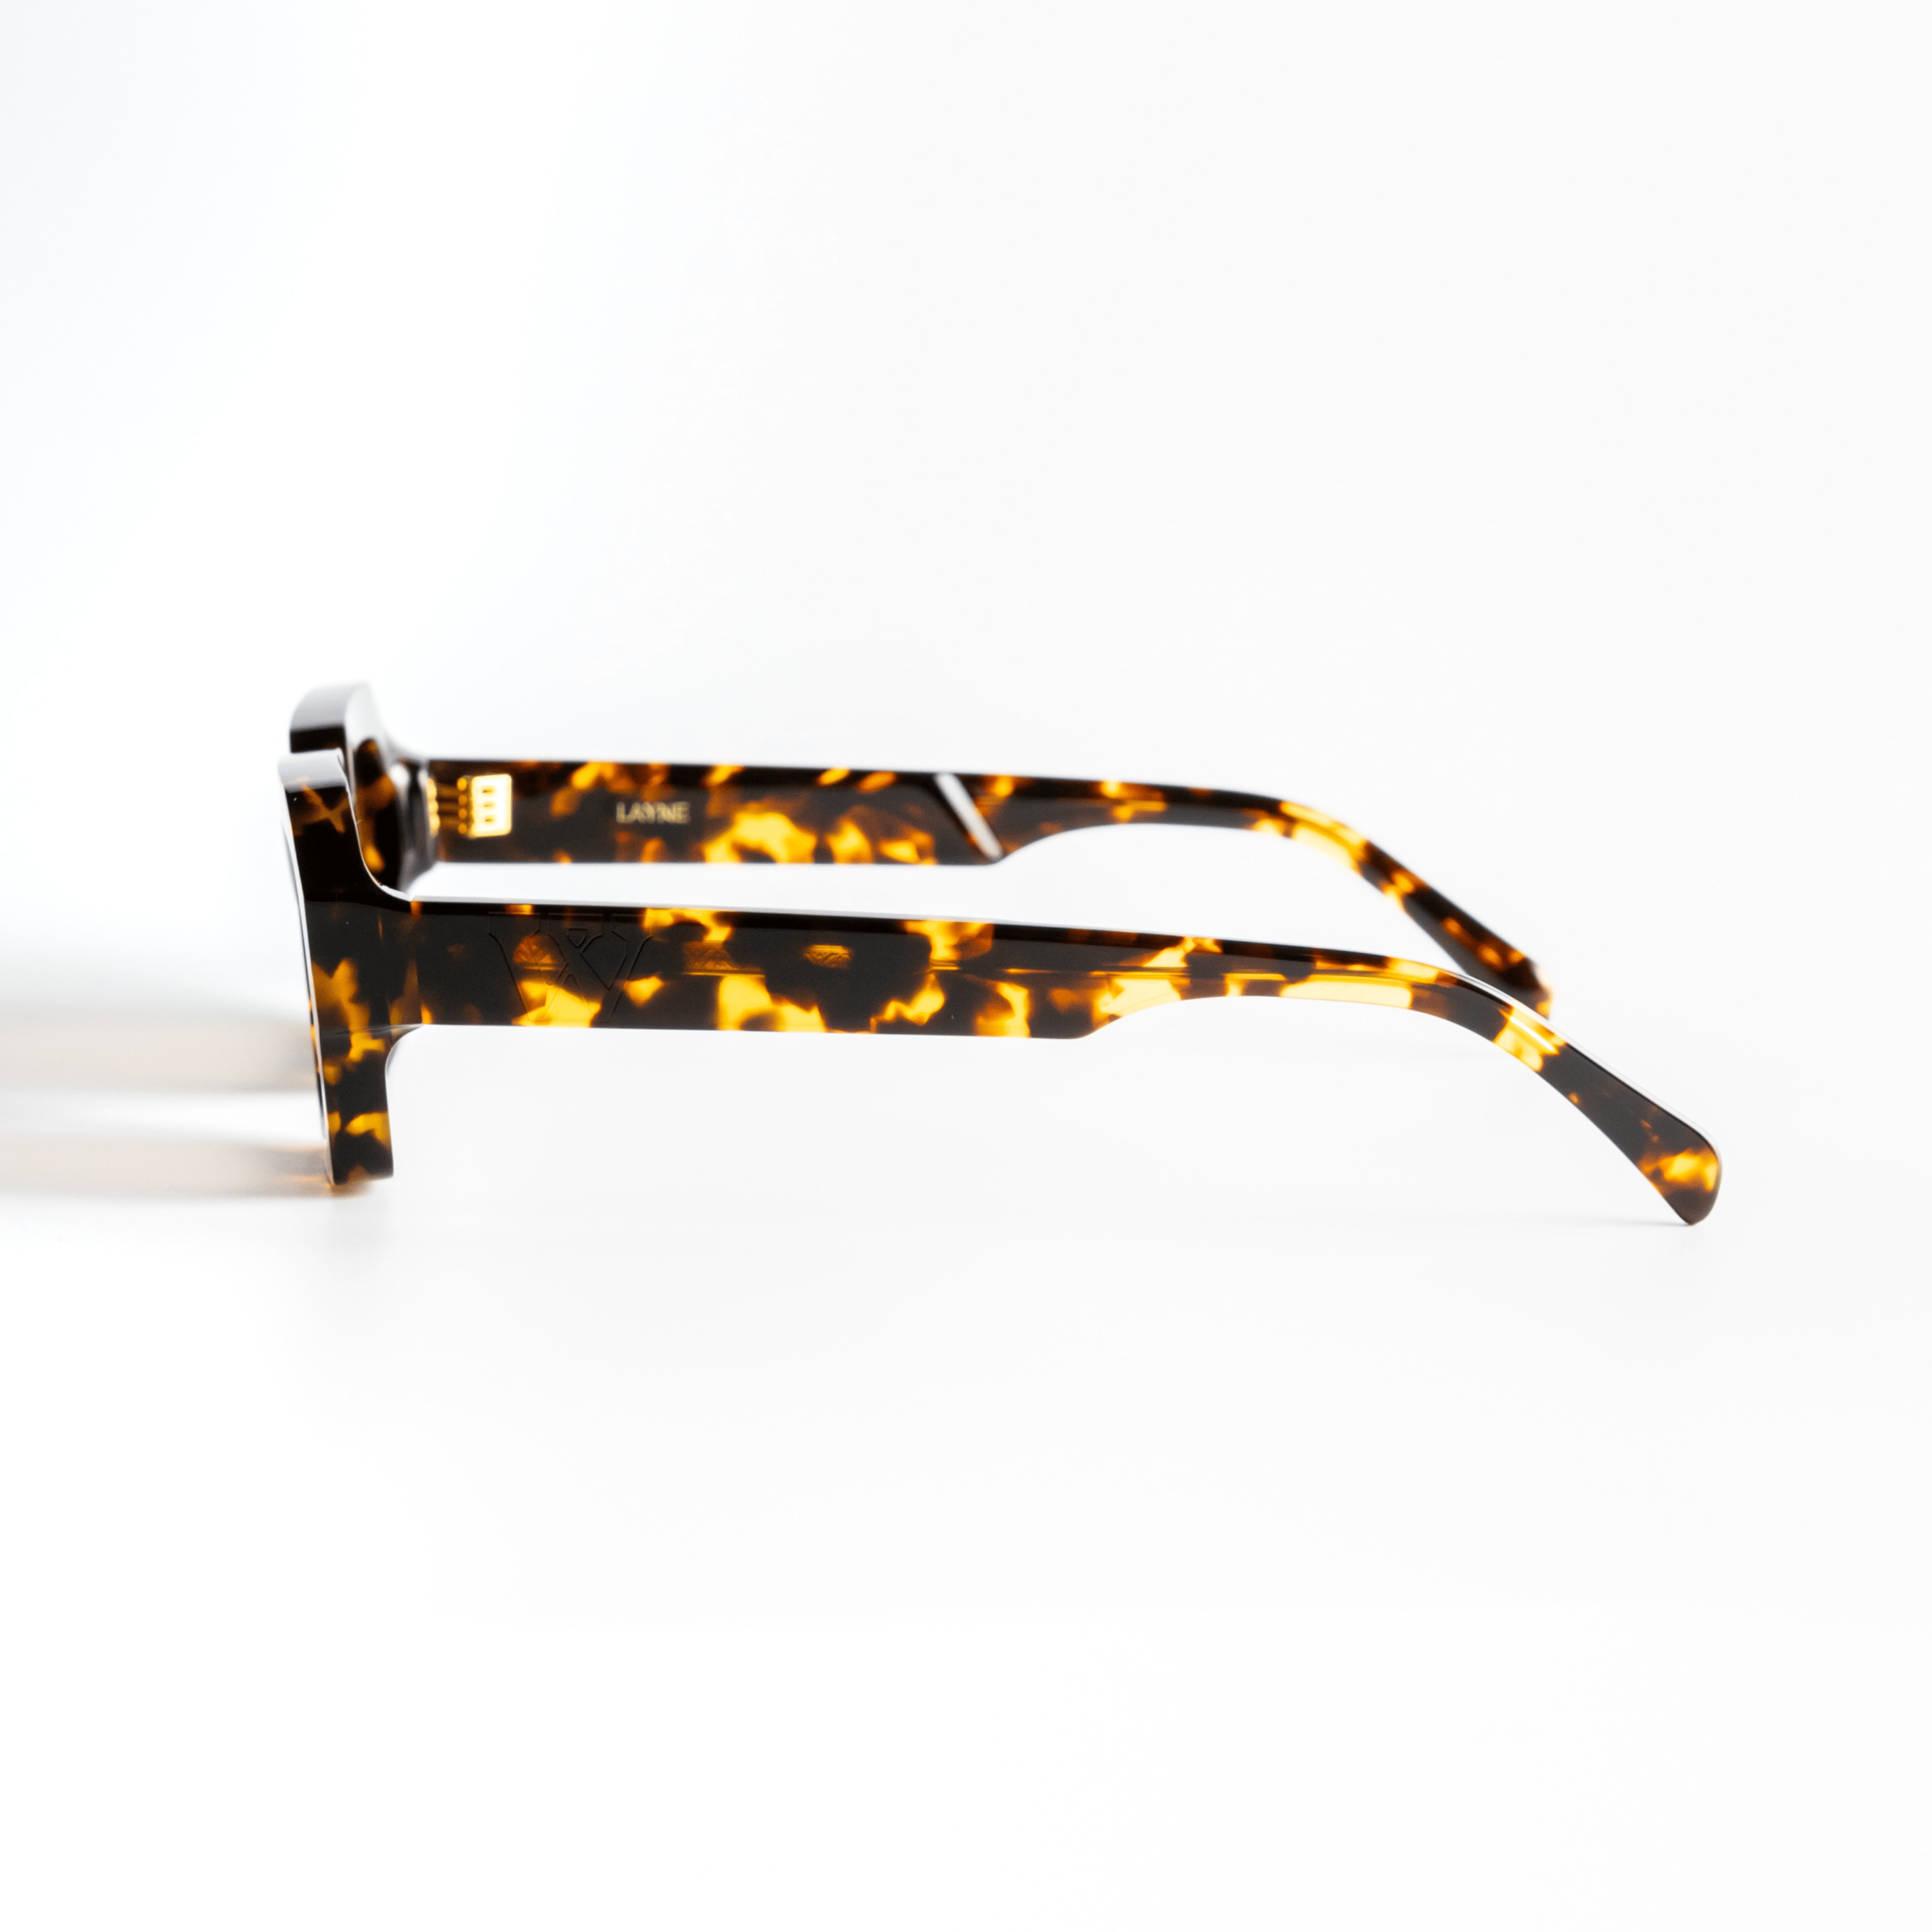 Walter Hill Sunglasses Tortoise / Standard / Polarized Cat.3 LAYNE - Tortoise